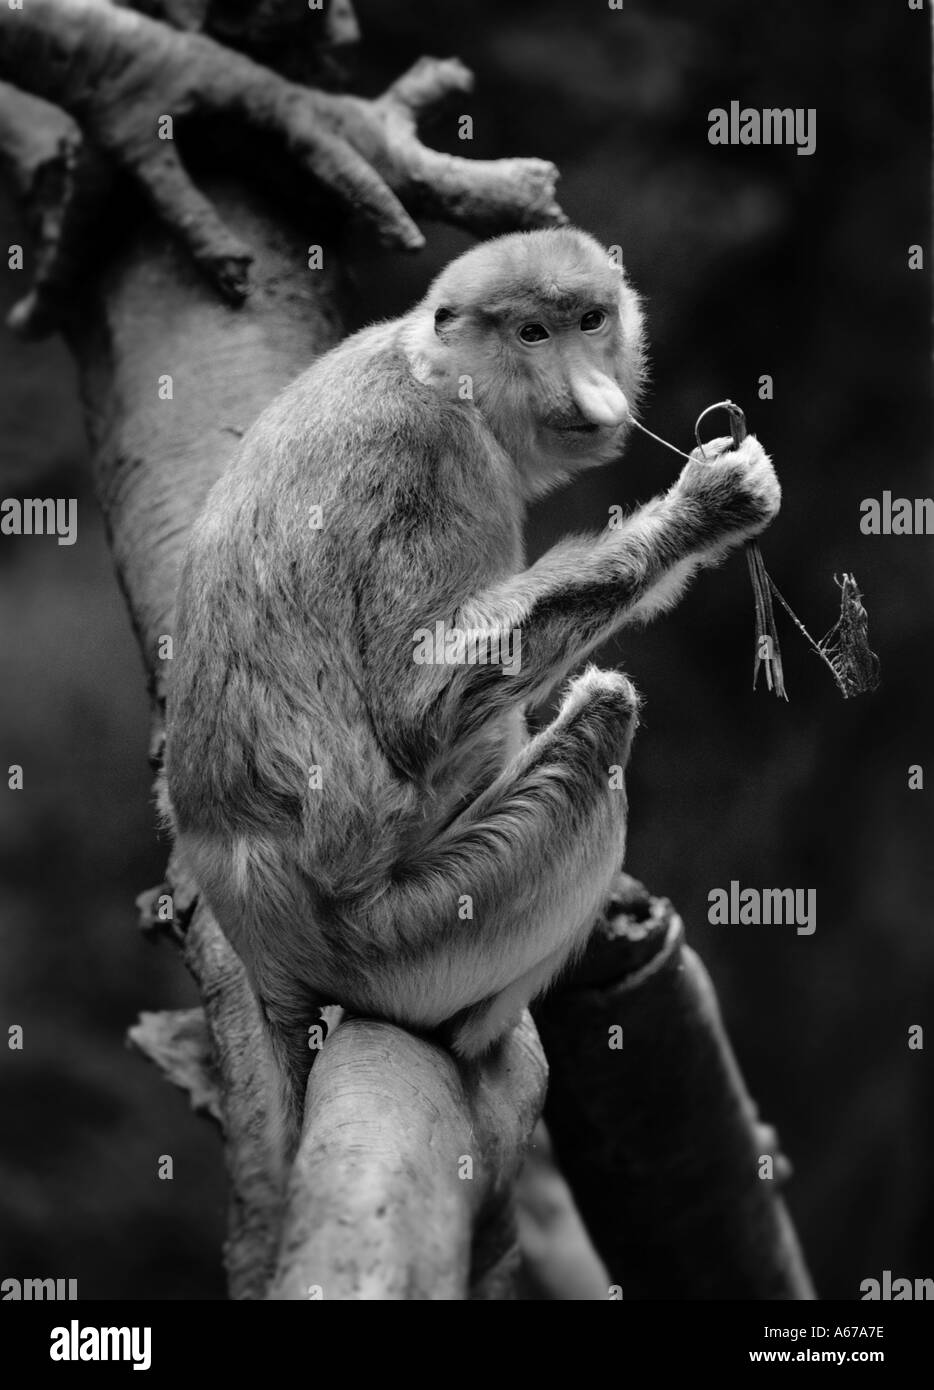 Rhesus monkey with floppy nose Humor Stock Photo